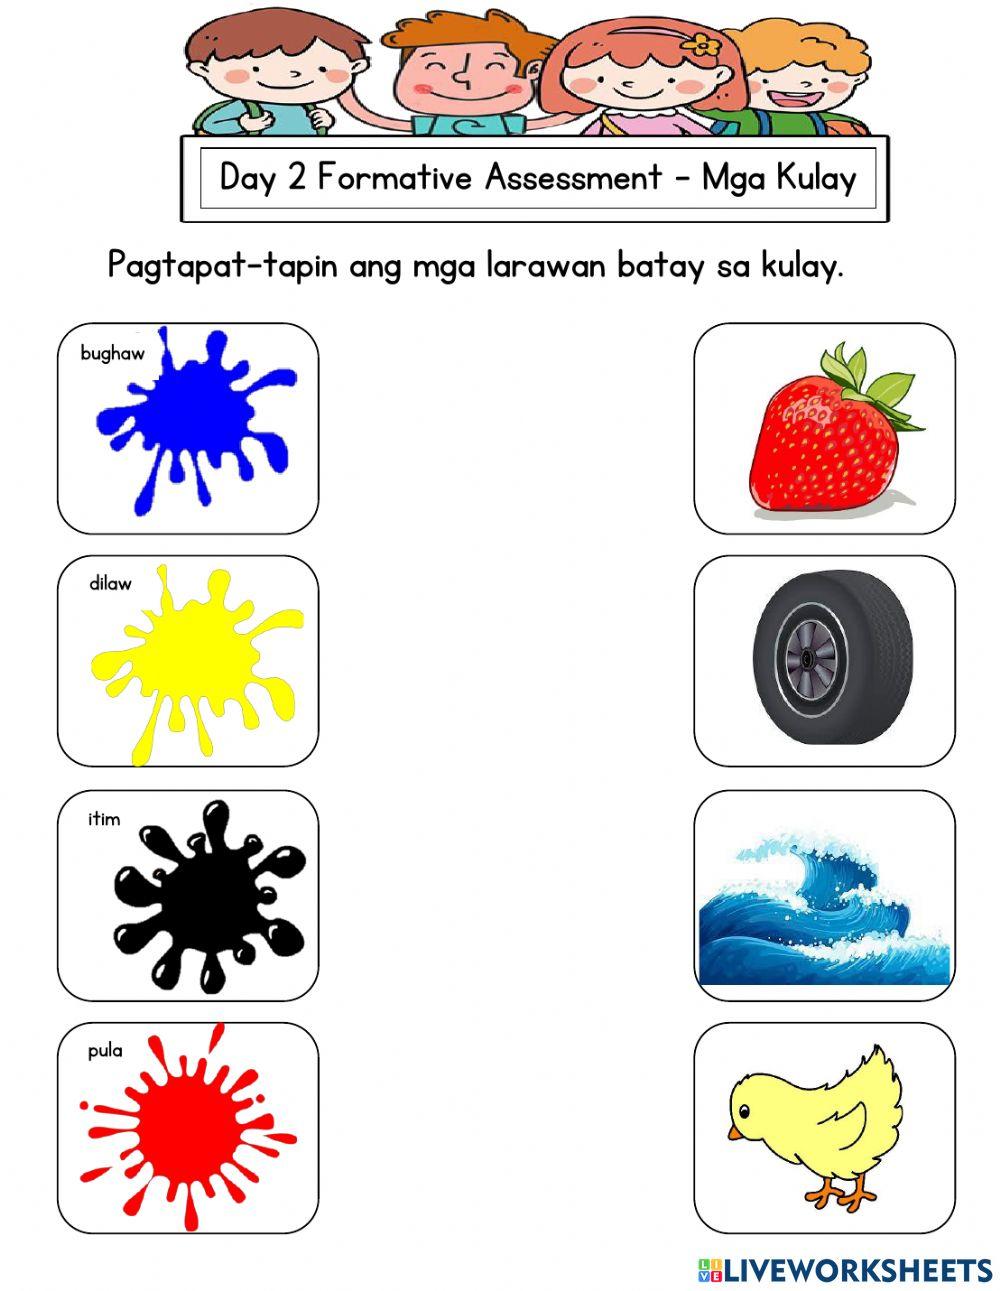 DAY 2 Formative Assessment - Mga Kulay worksheet | Live Worksheets